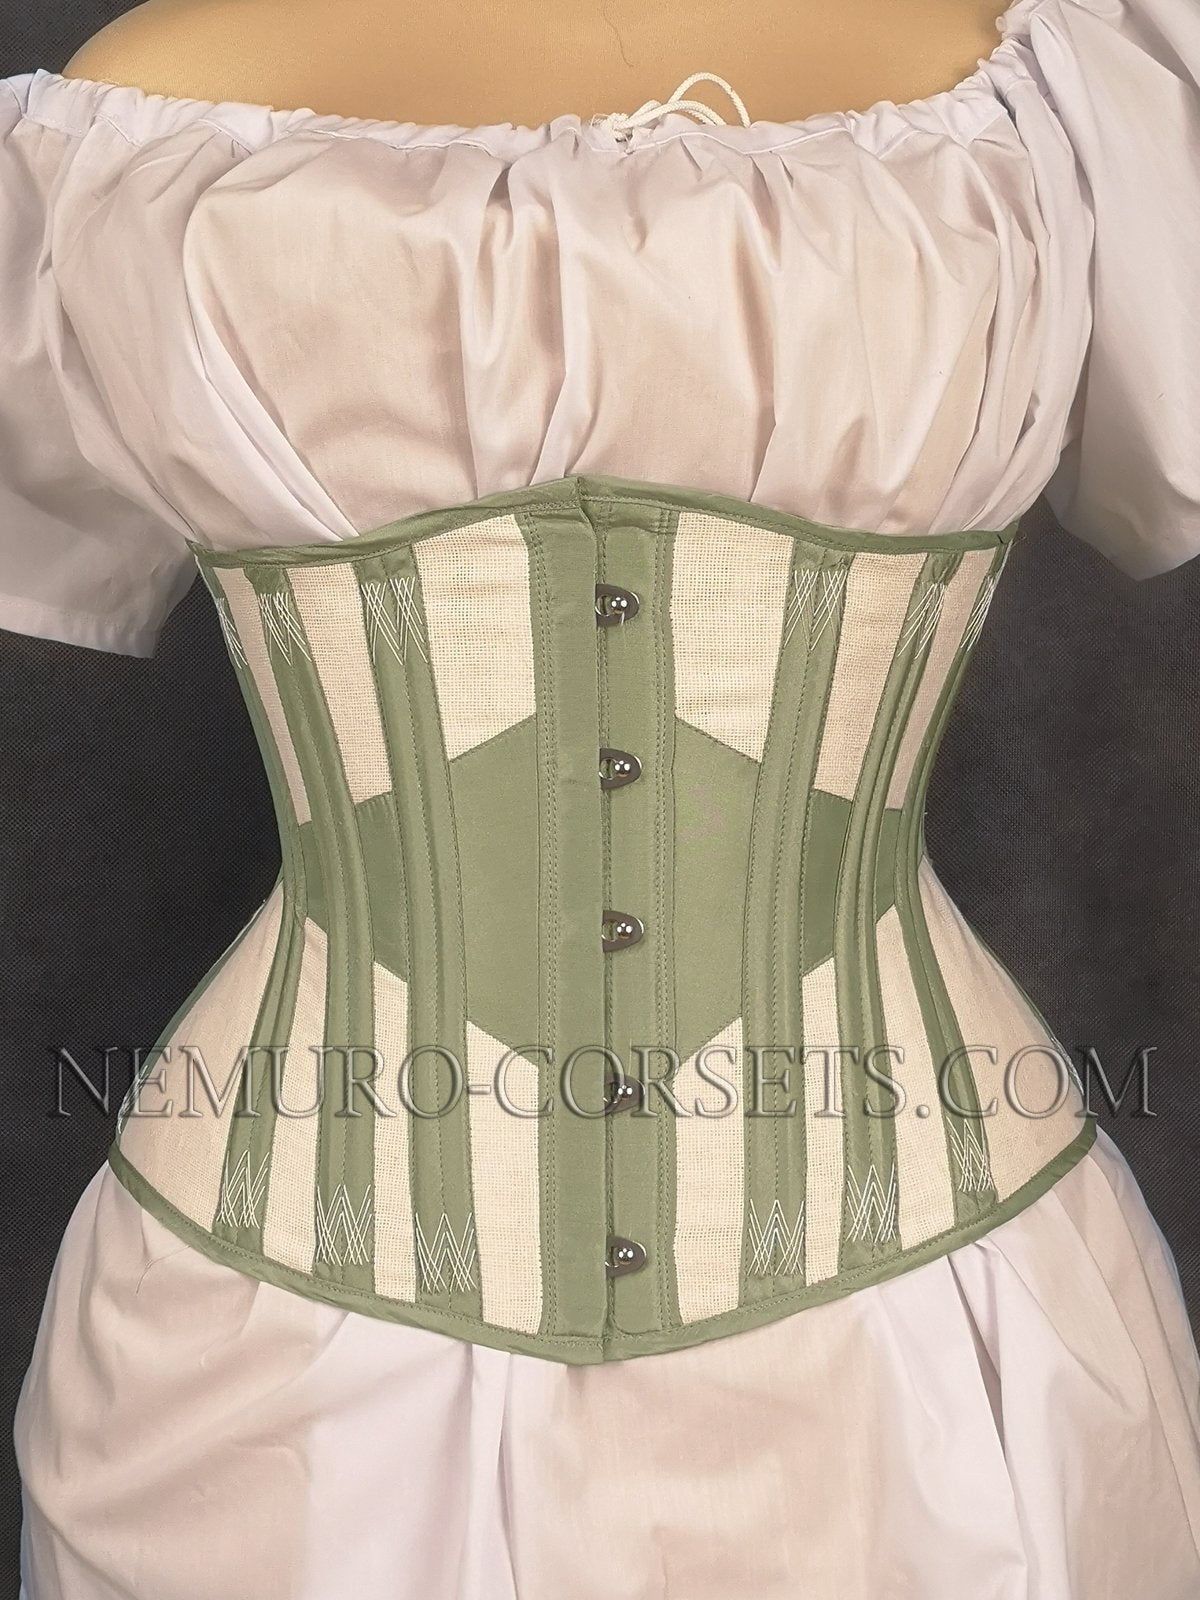 Ventilated underbust corset 1900s - Custom order  –  Nemuro Corsets